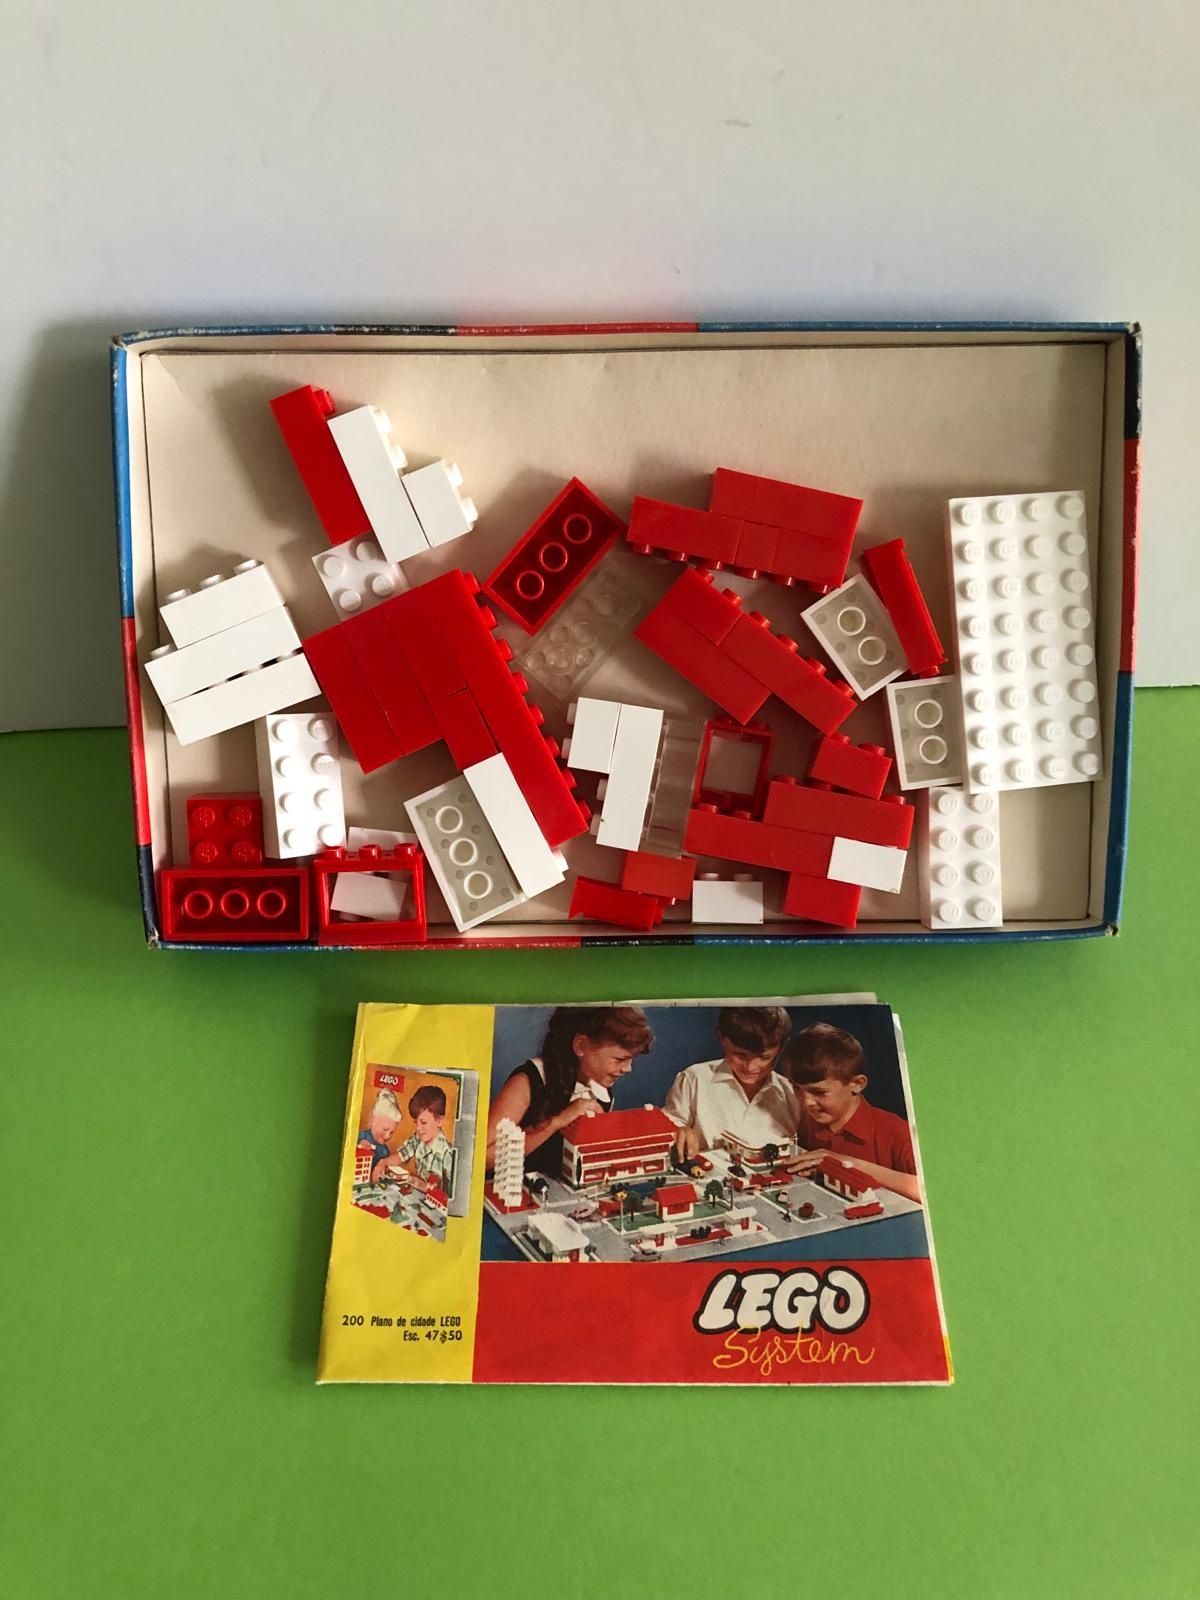 Lego ref 700/6 anos 60